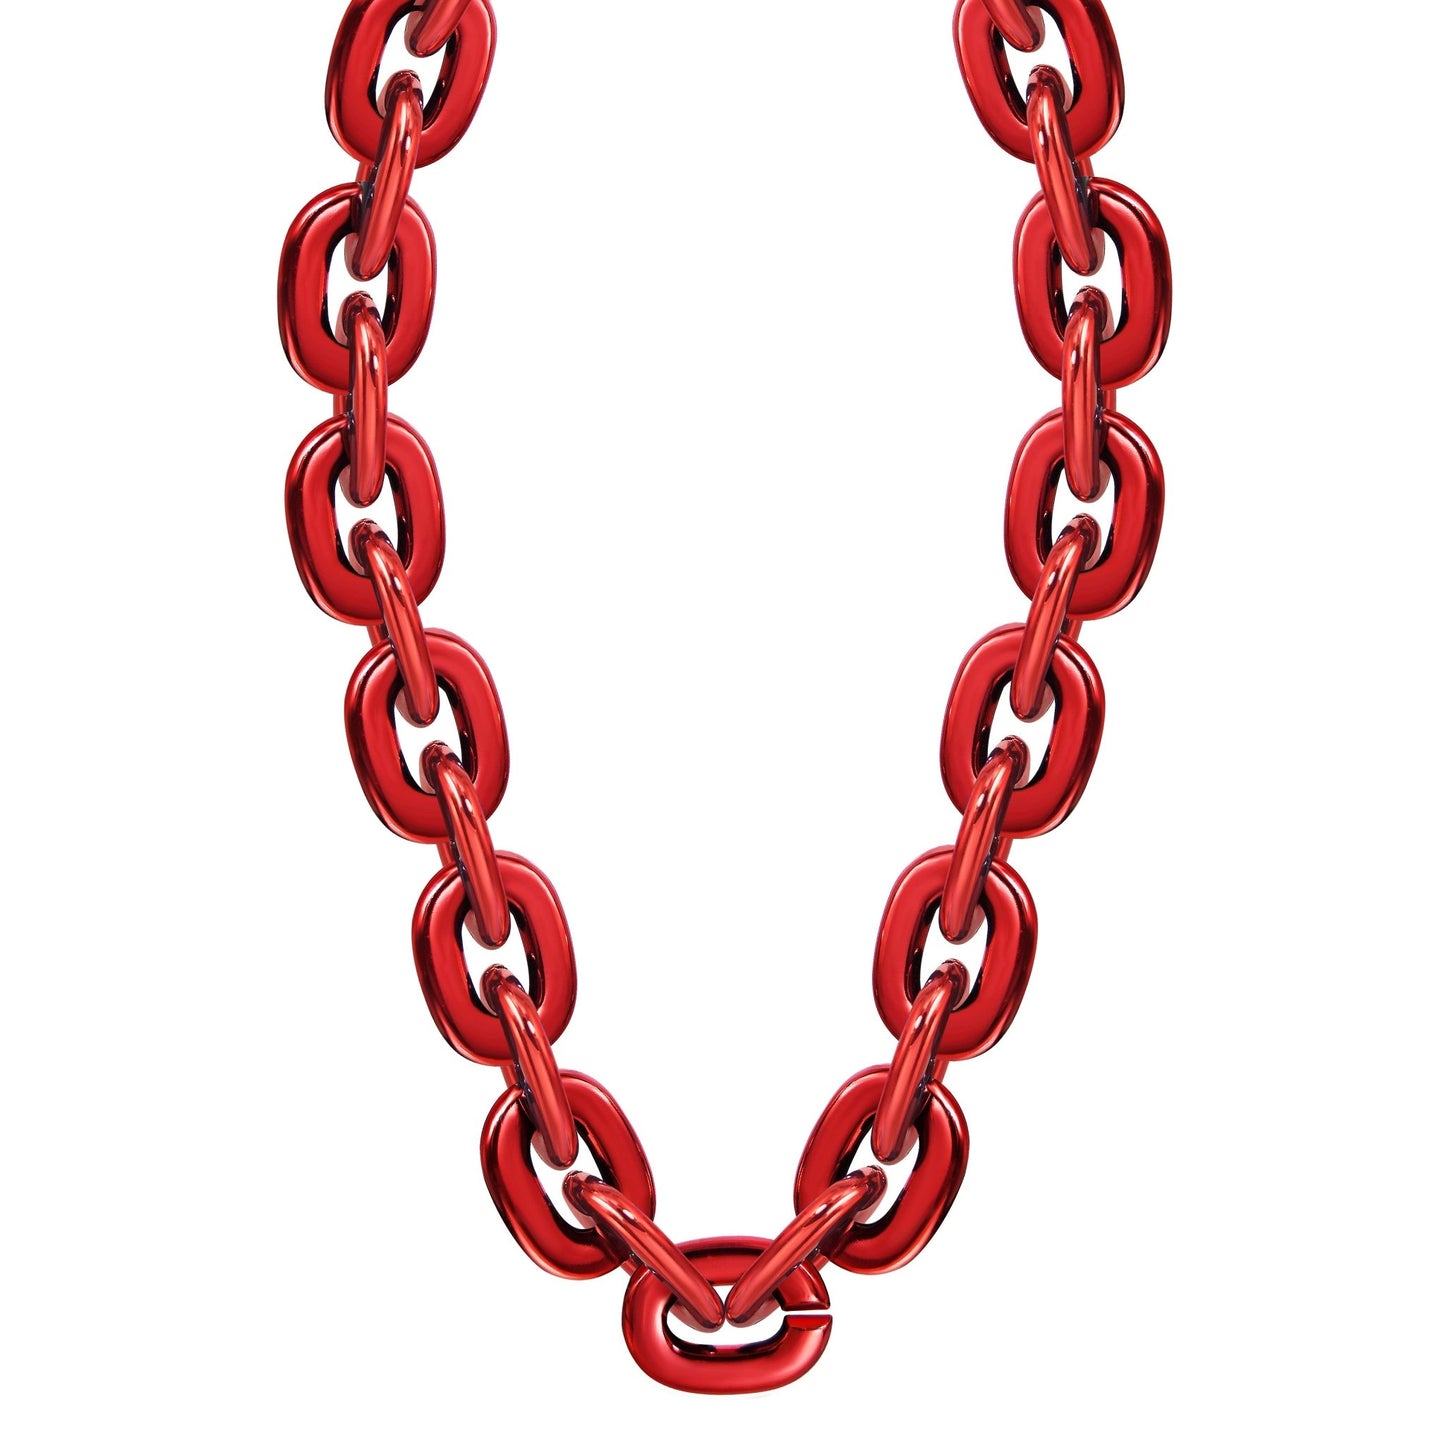 Jumbo Fan Chain Necklace - Gamedays Gear - Red